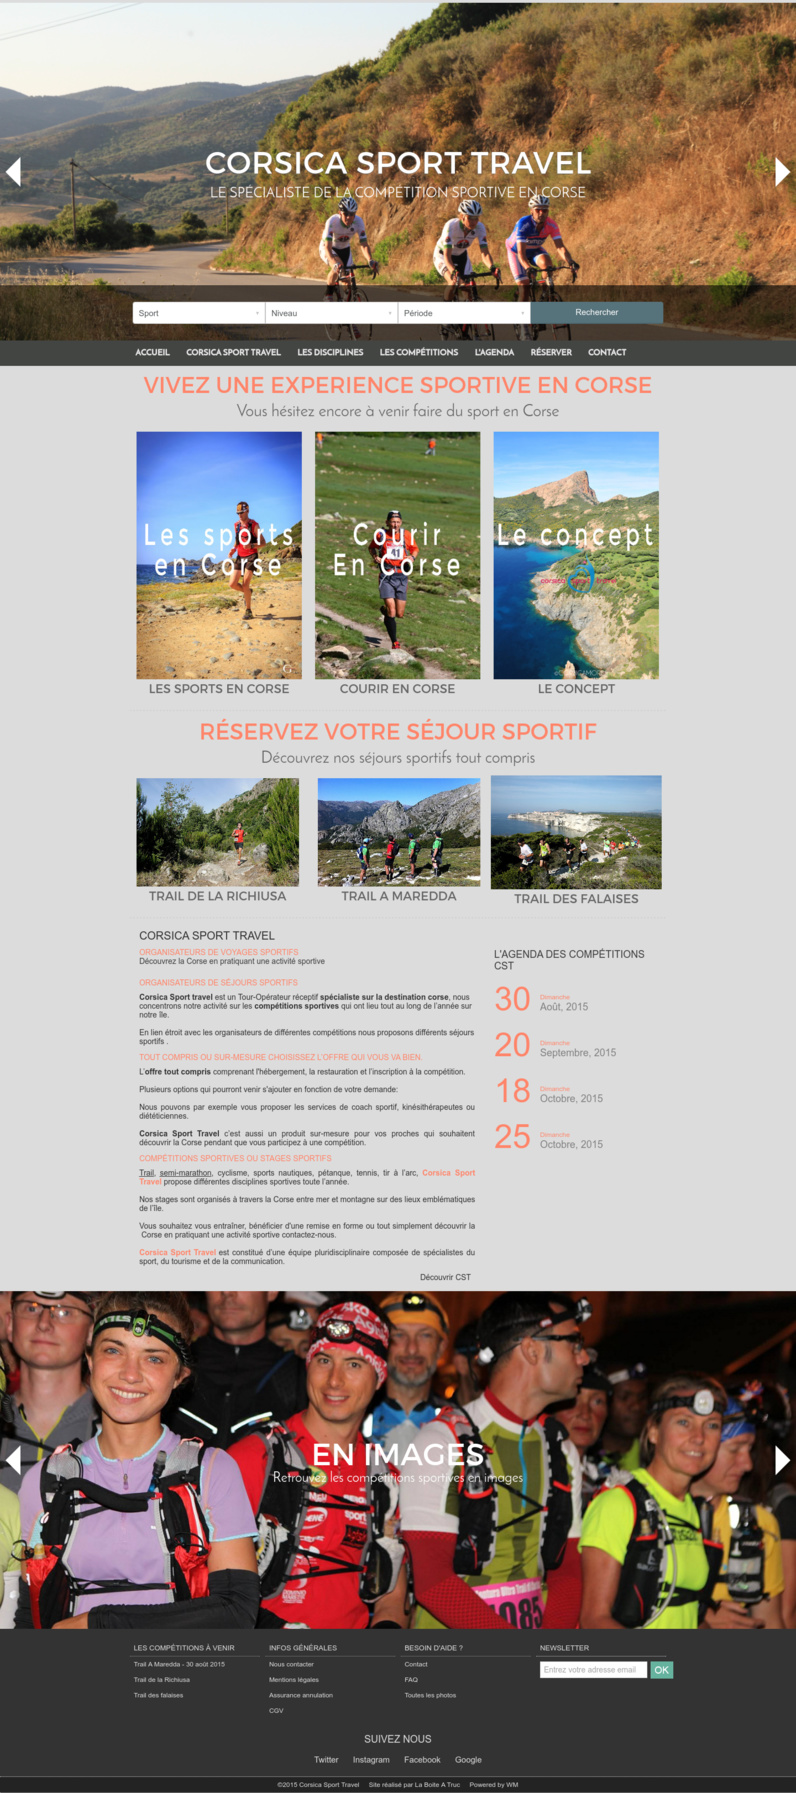 Corsica Sport Travel